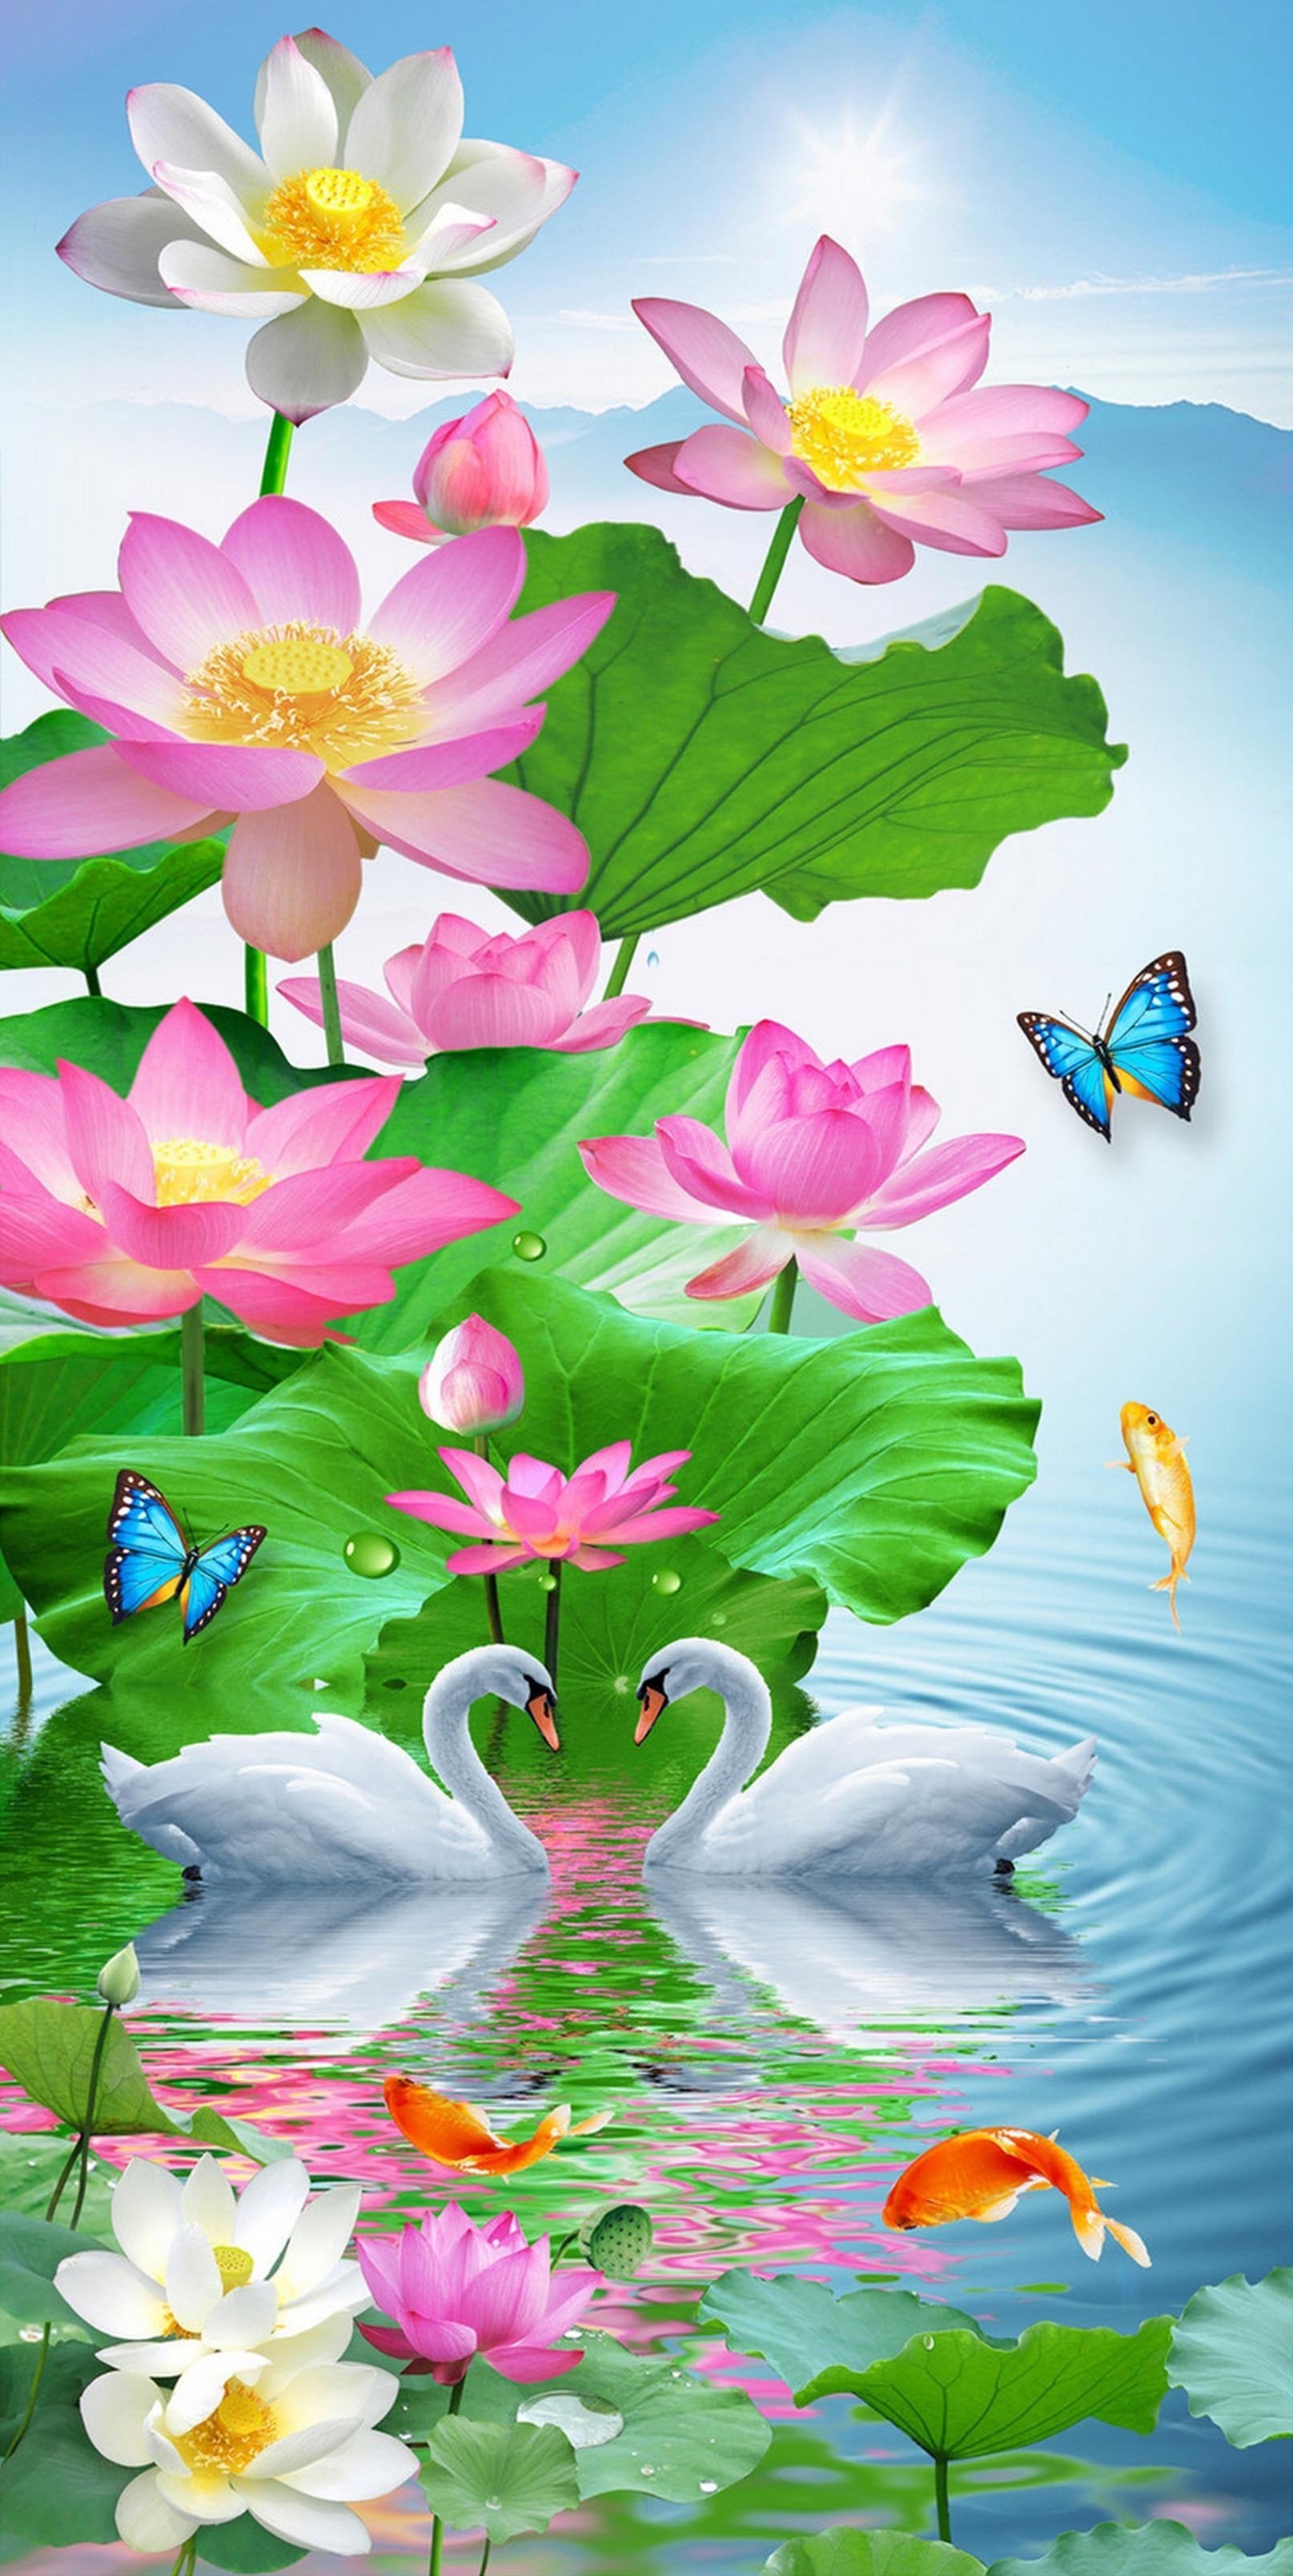 3D Charming Lotus Flowers 1422 Stair Risers Wallpaper AJ Wallpaper 